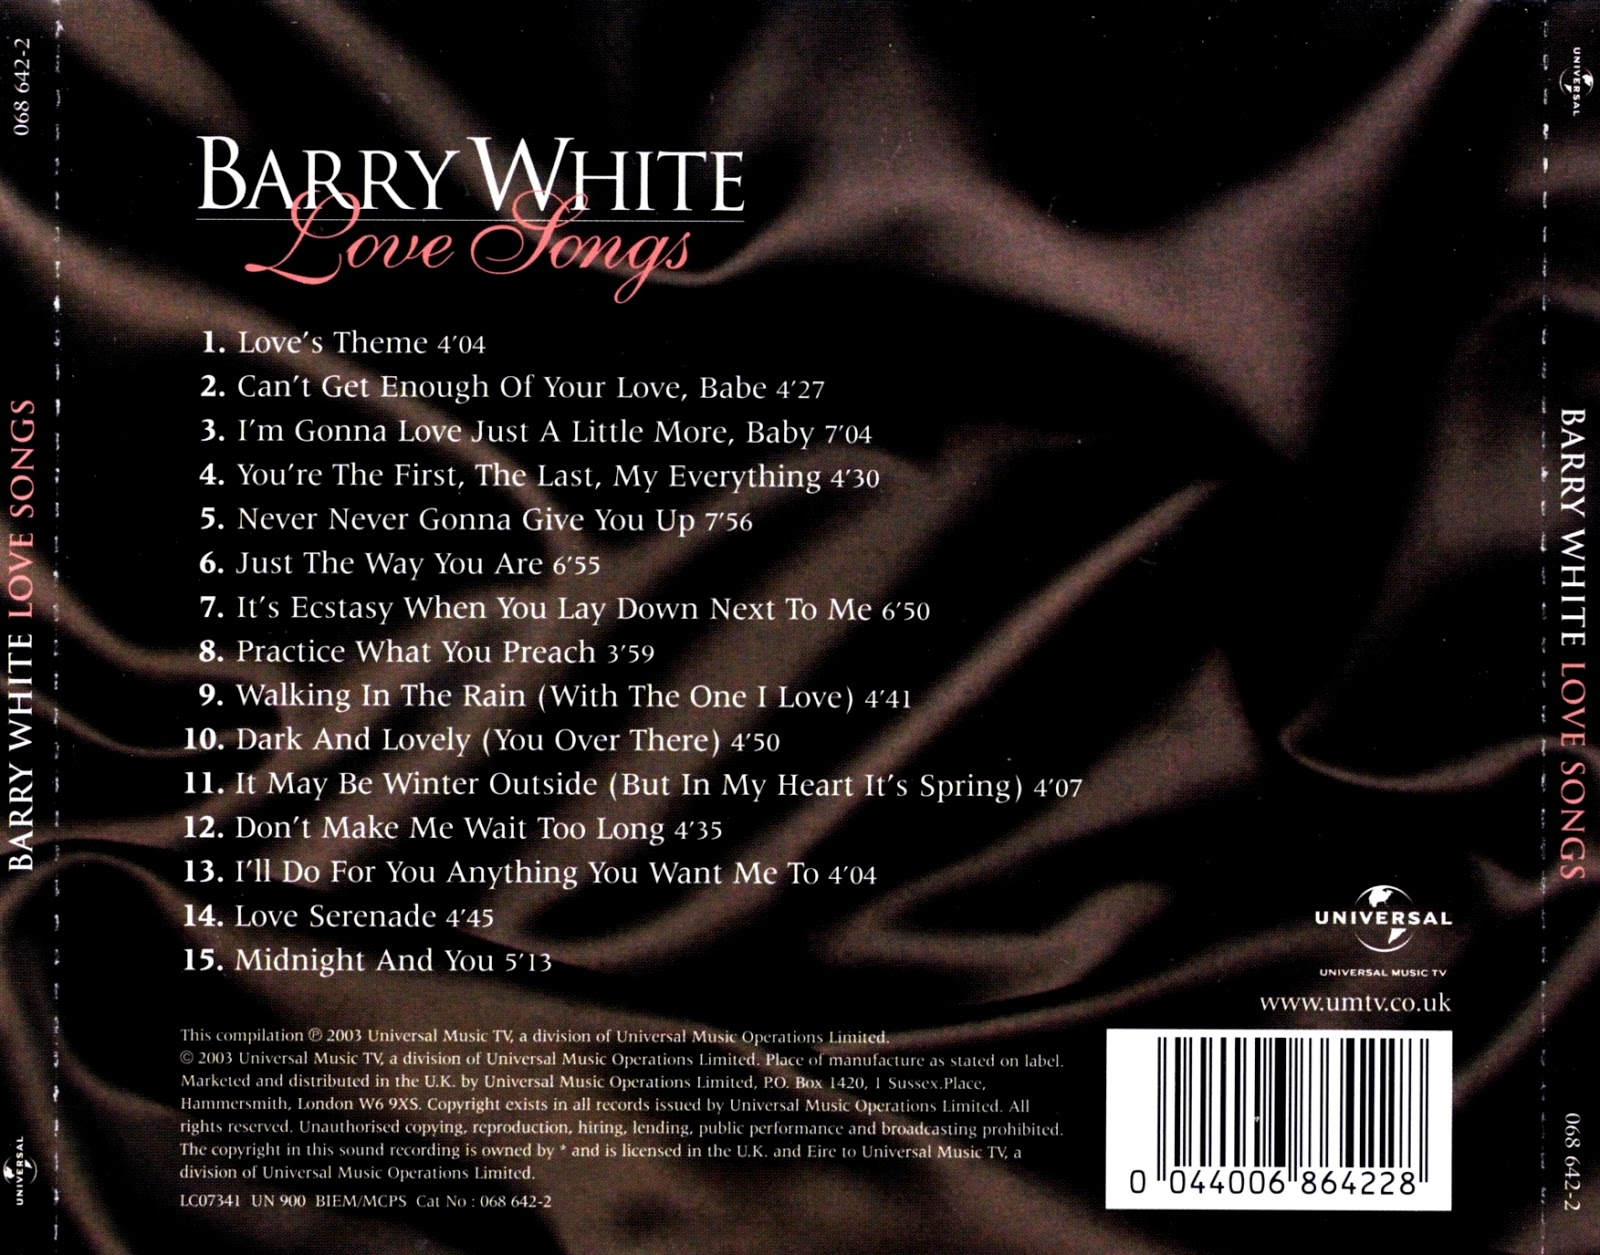 Вайт лове. Barry White Songs. Barry White Love's Theme. Barry White альбомы. Barry White Covers.